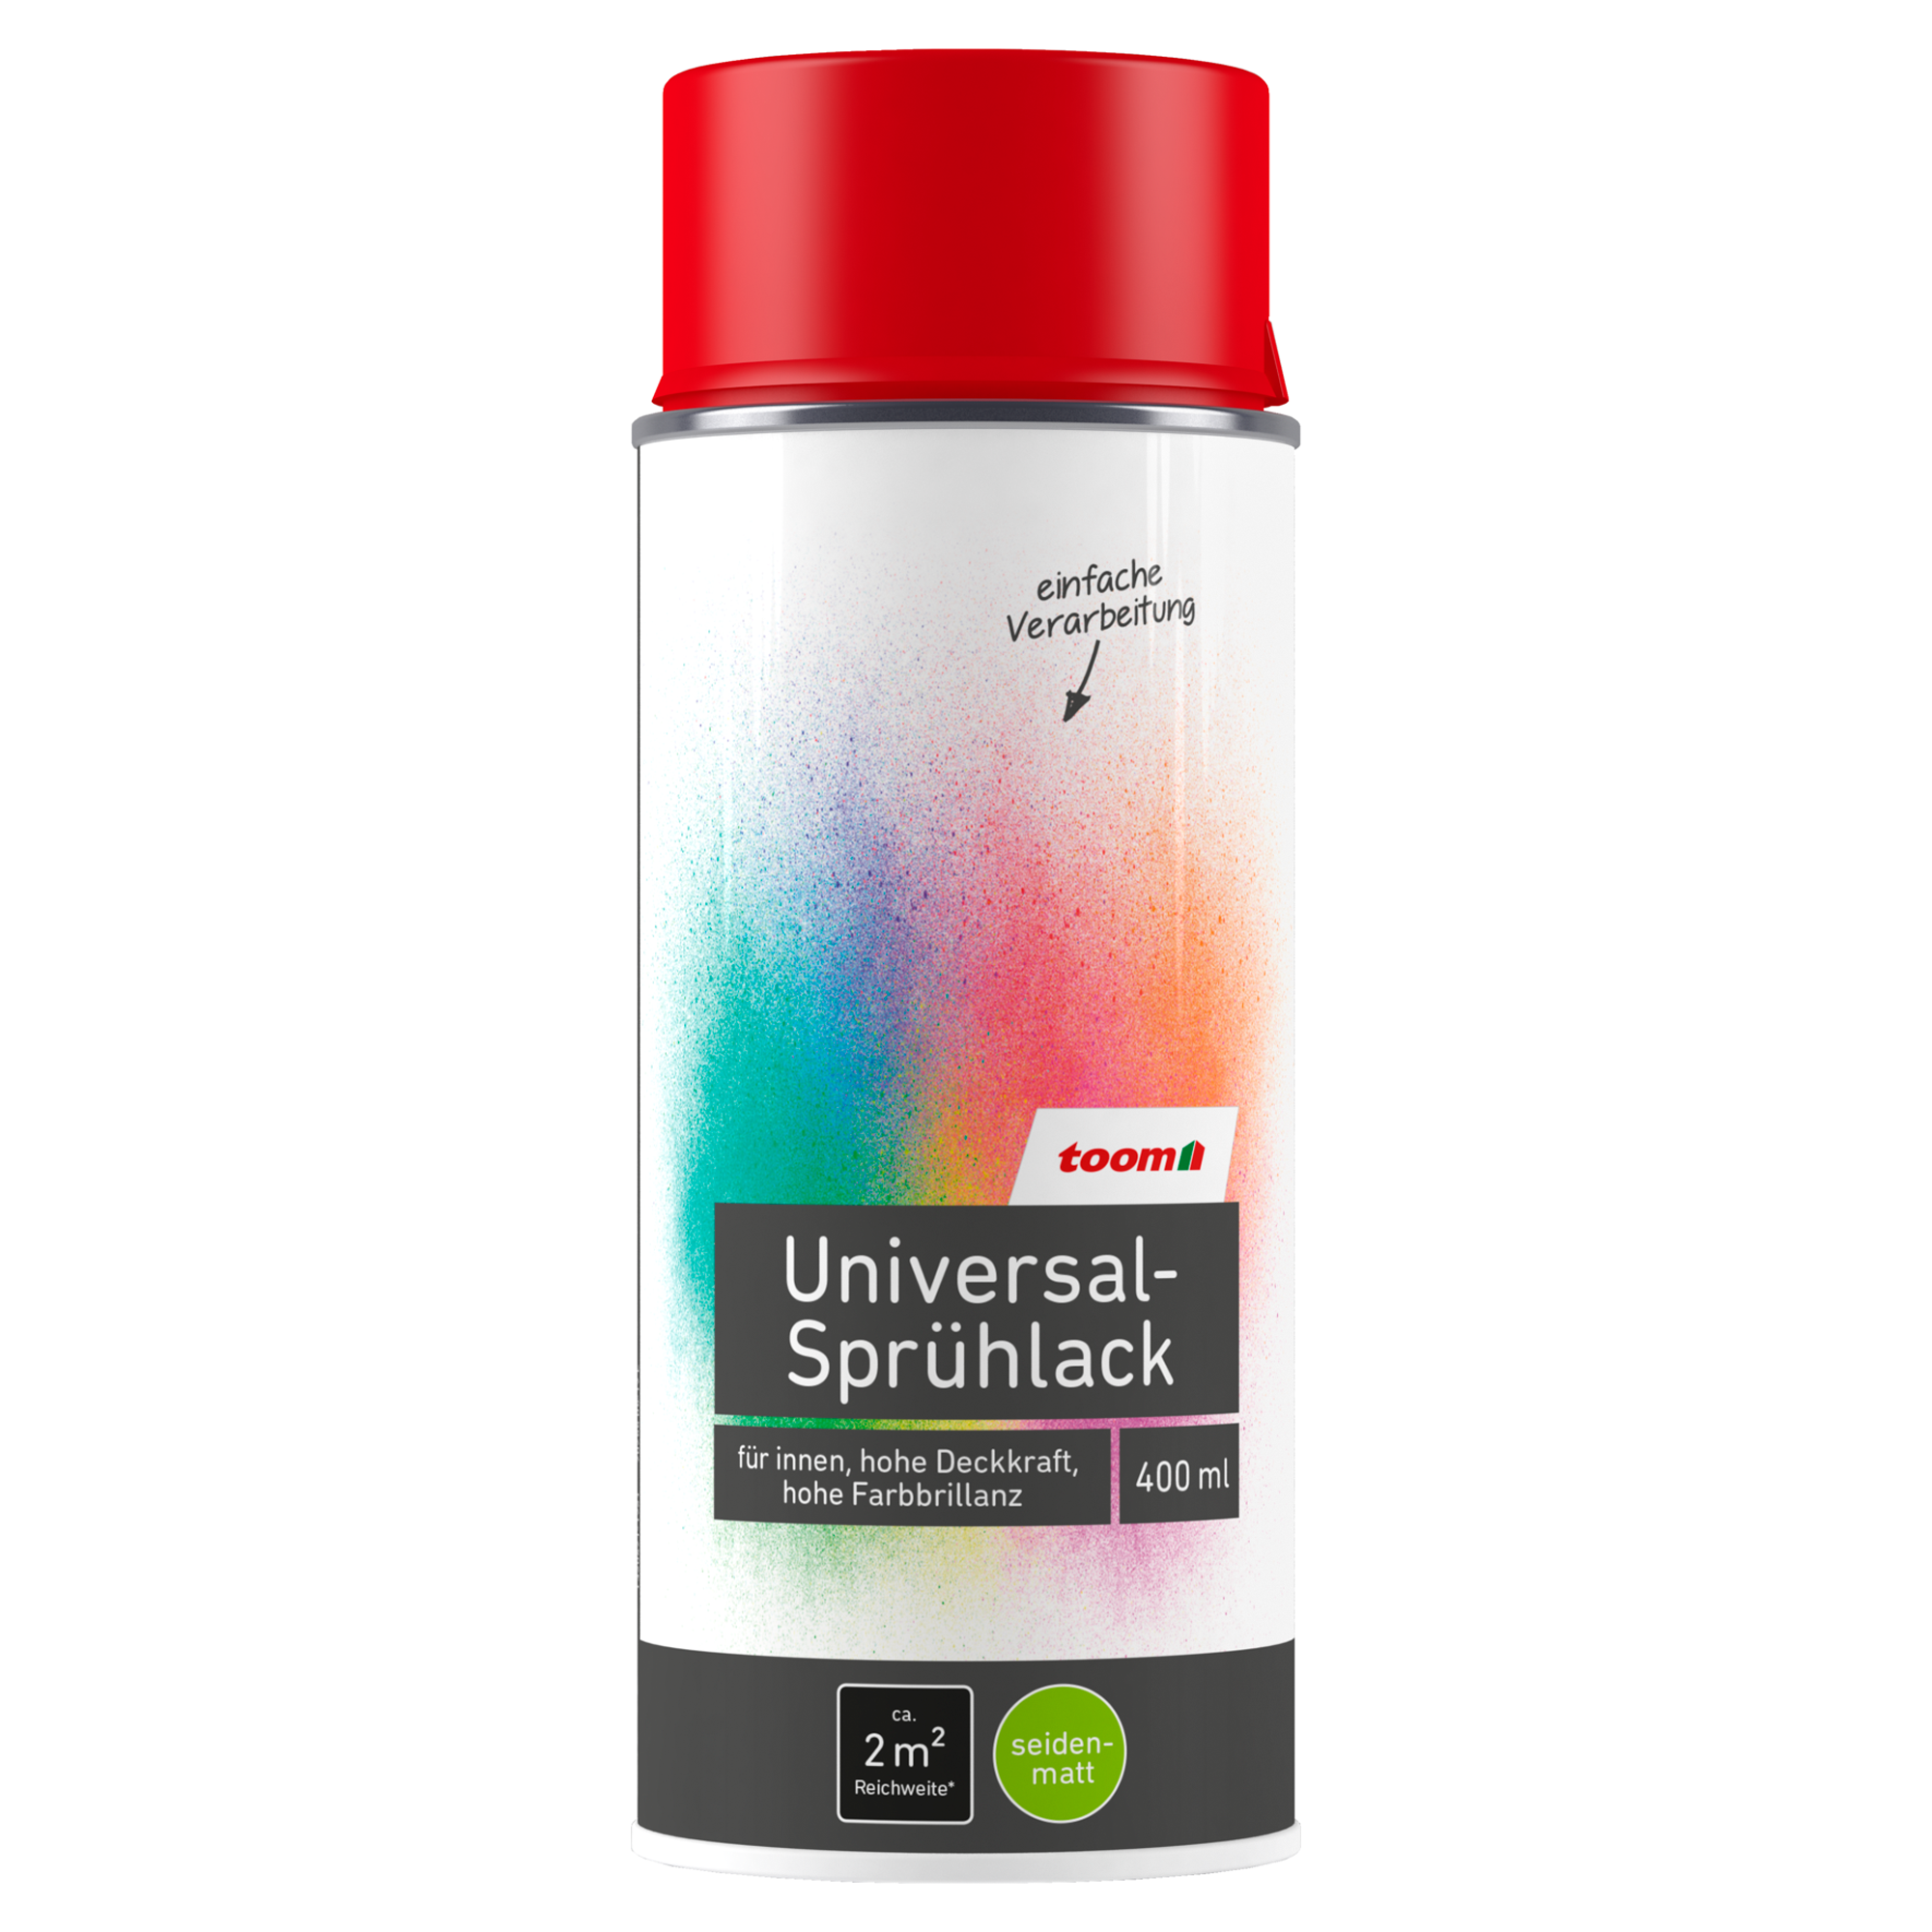 Universal-Sprühlack 'Mohnblume' feuerrot seidenmatt 400 ml + product picture